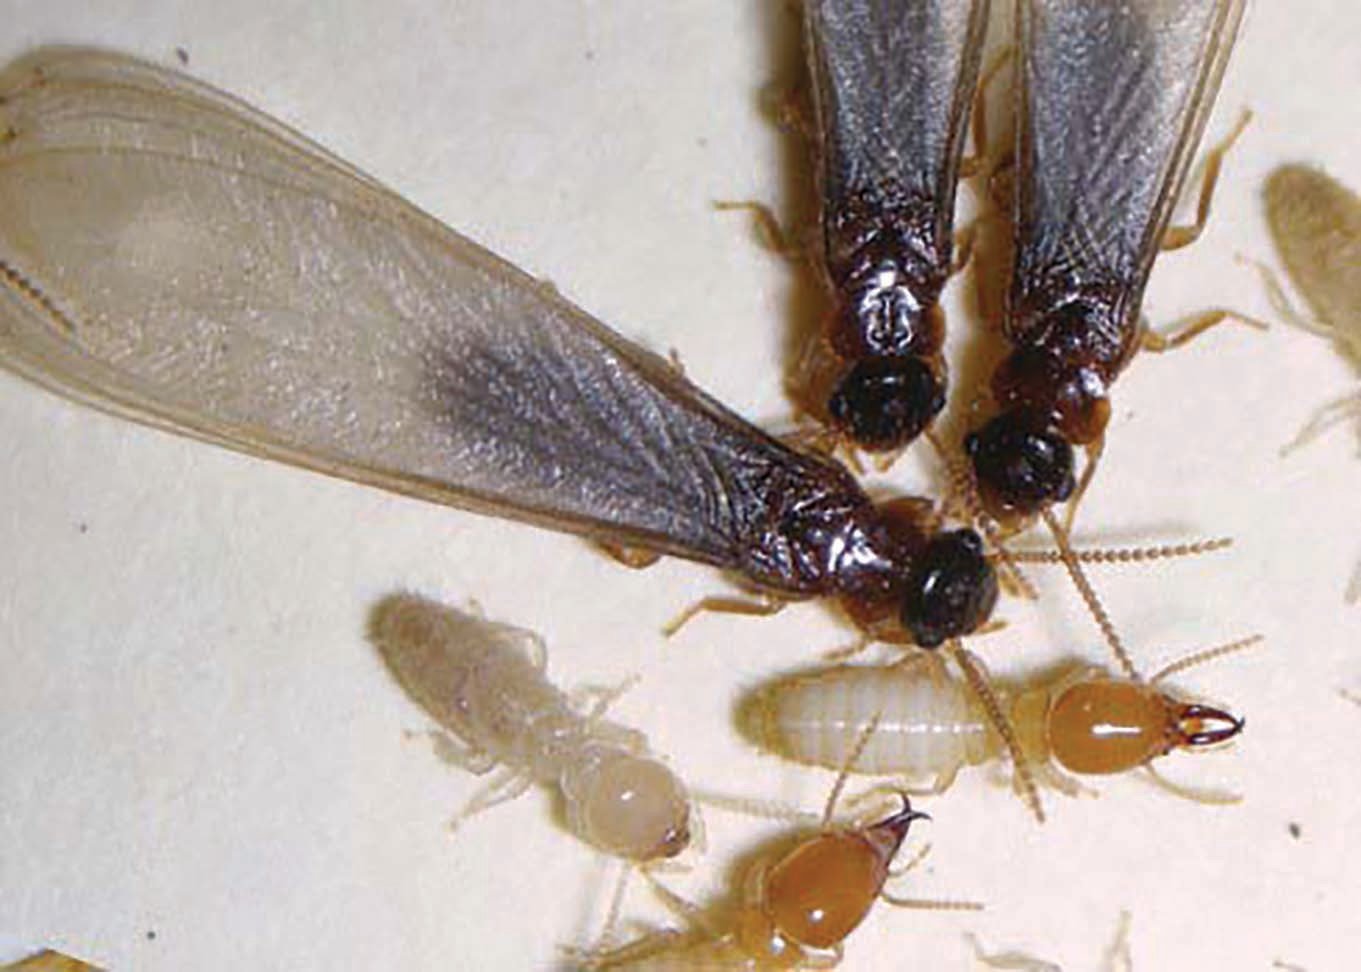 Close-up view of an Asian Subterranean termite.